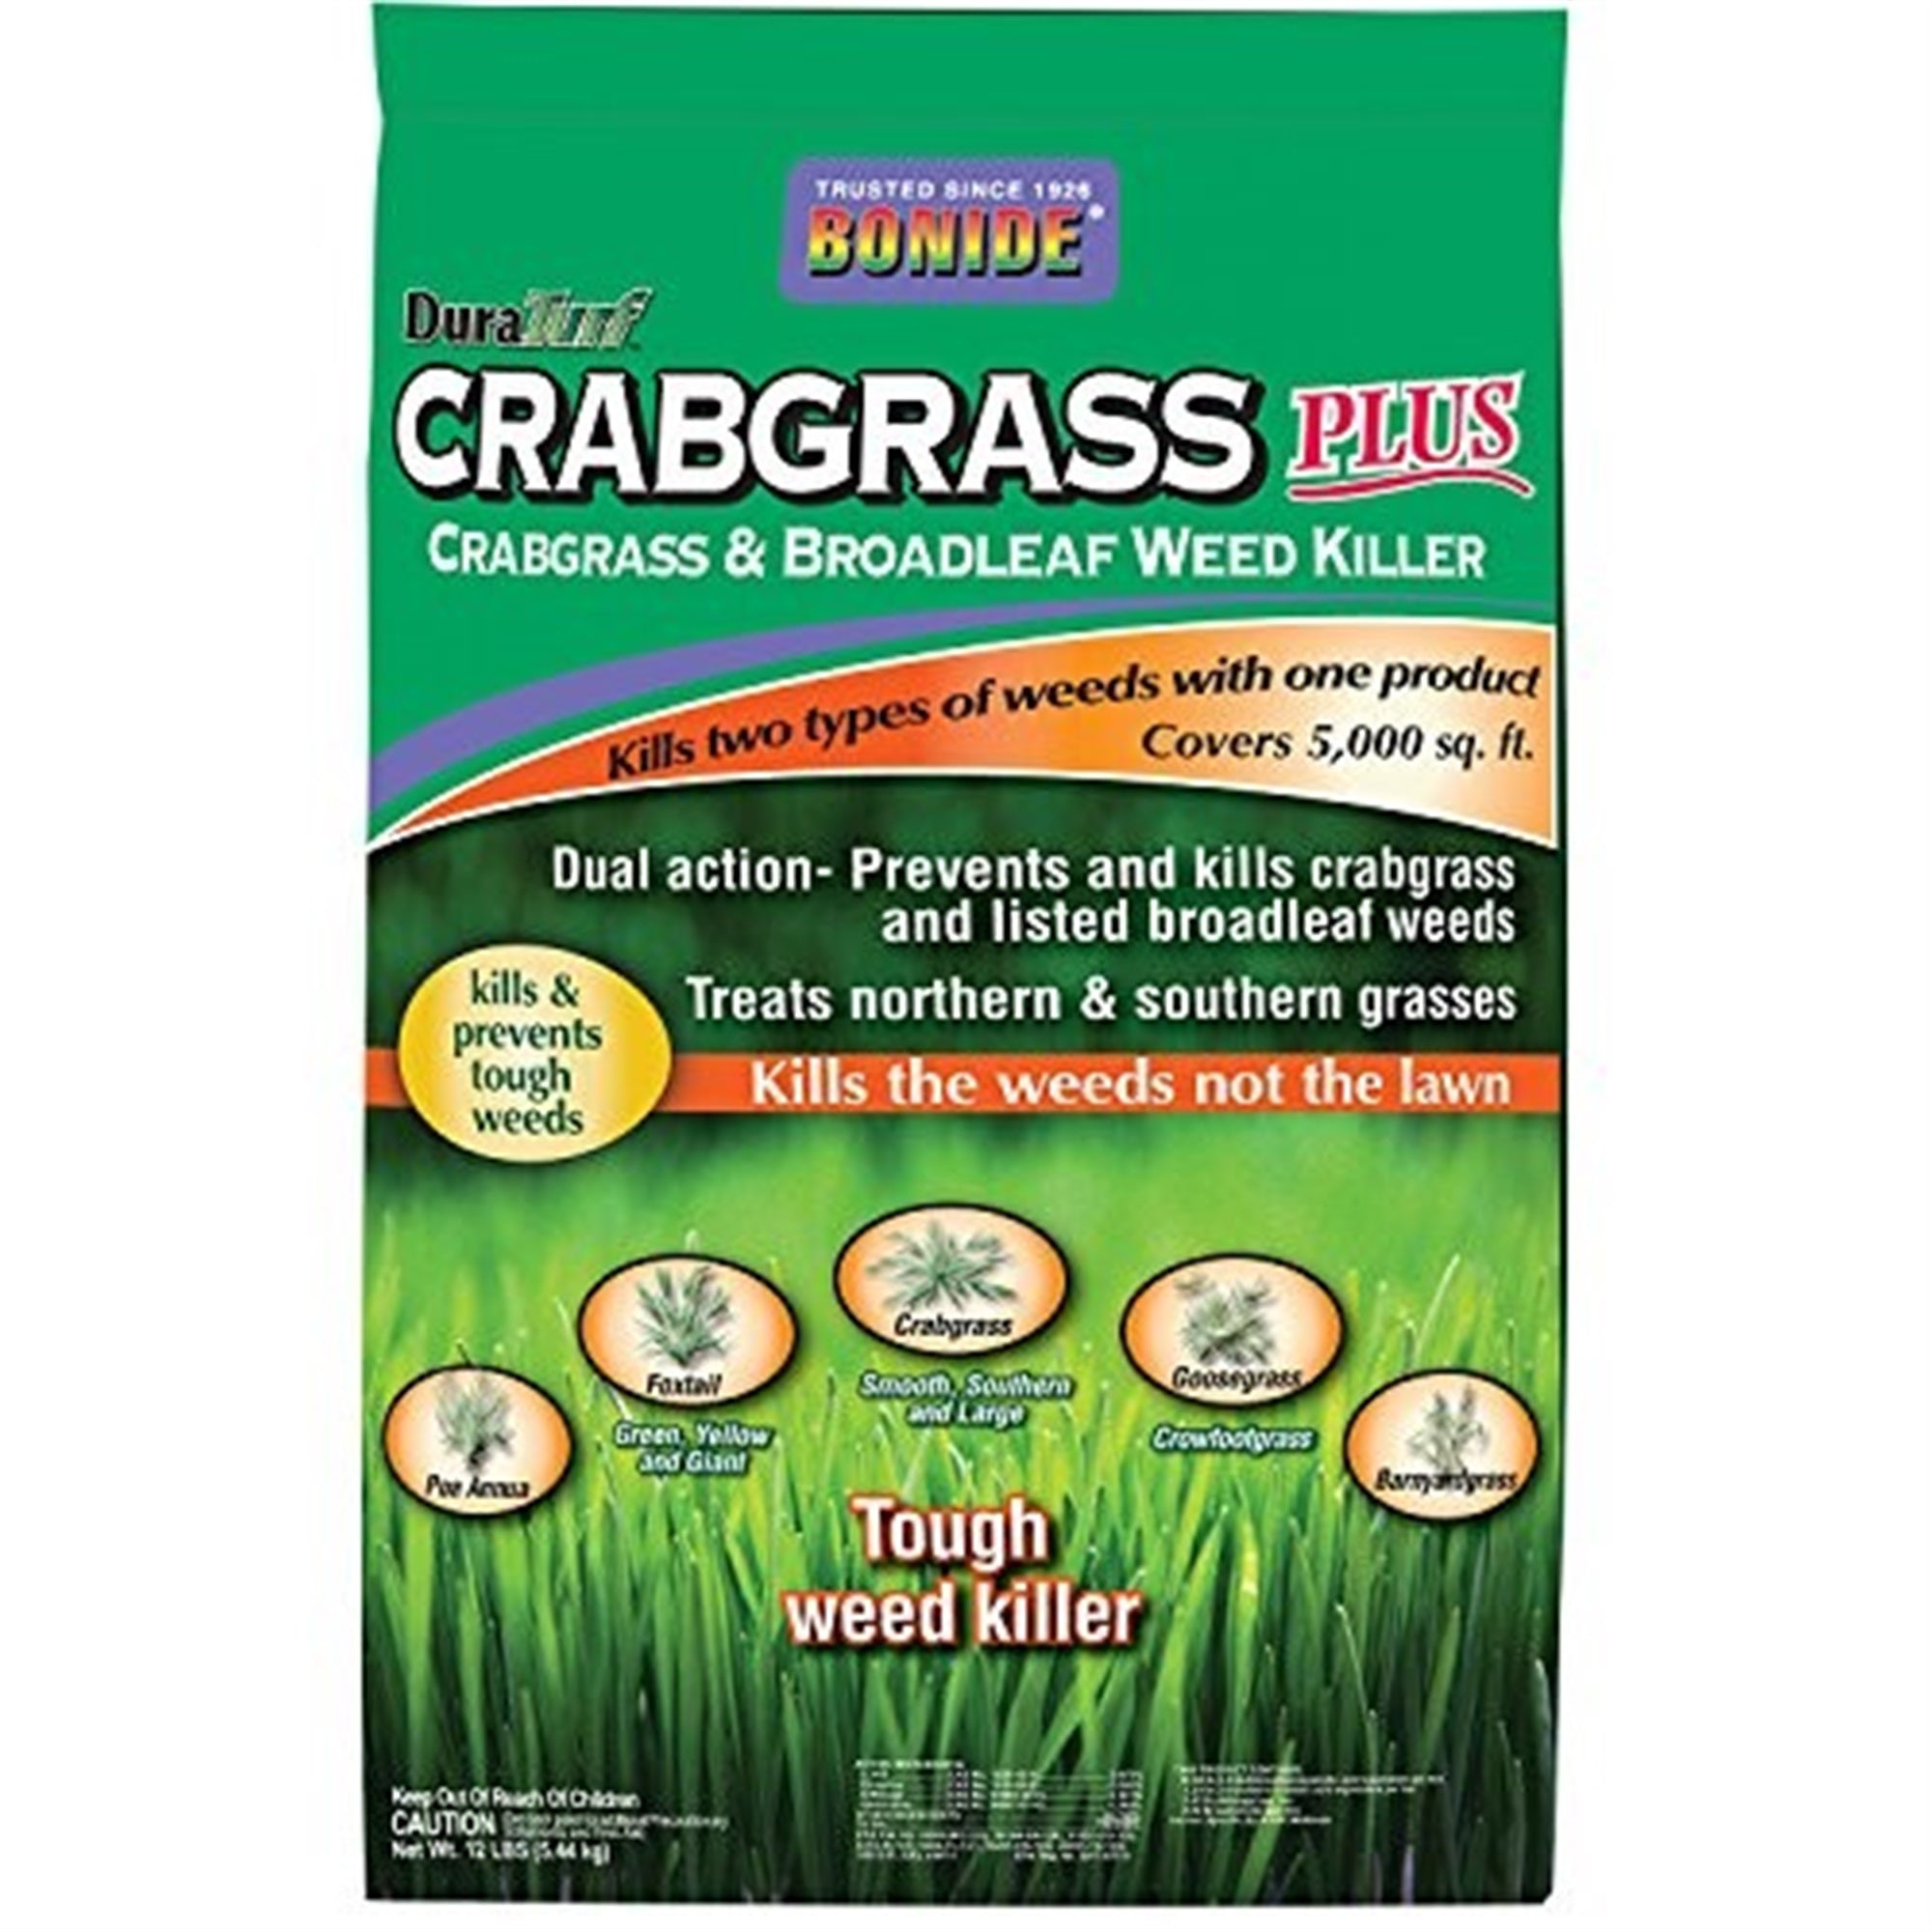 Bonide Products 5M Crabgrass Weed Killer, 12lb